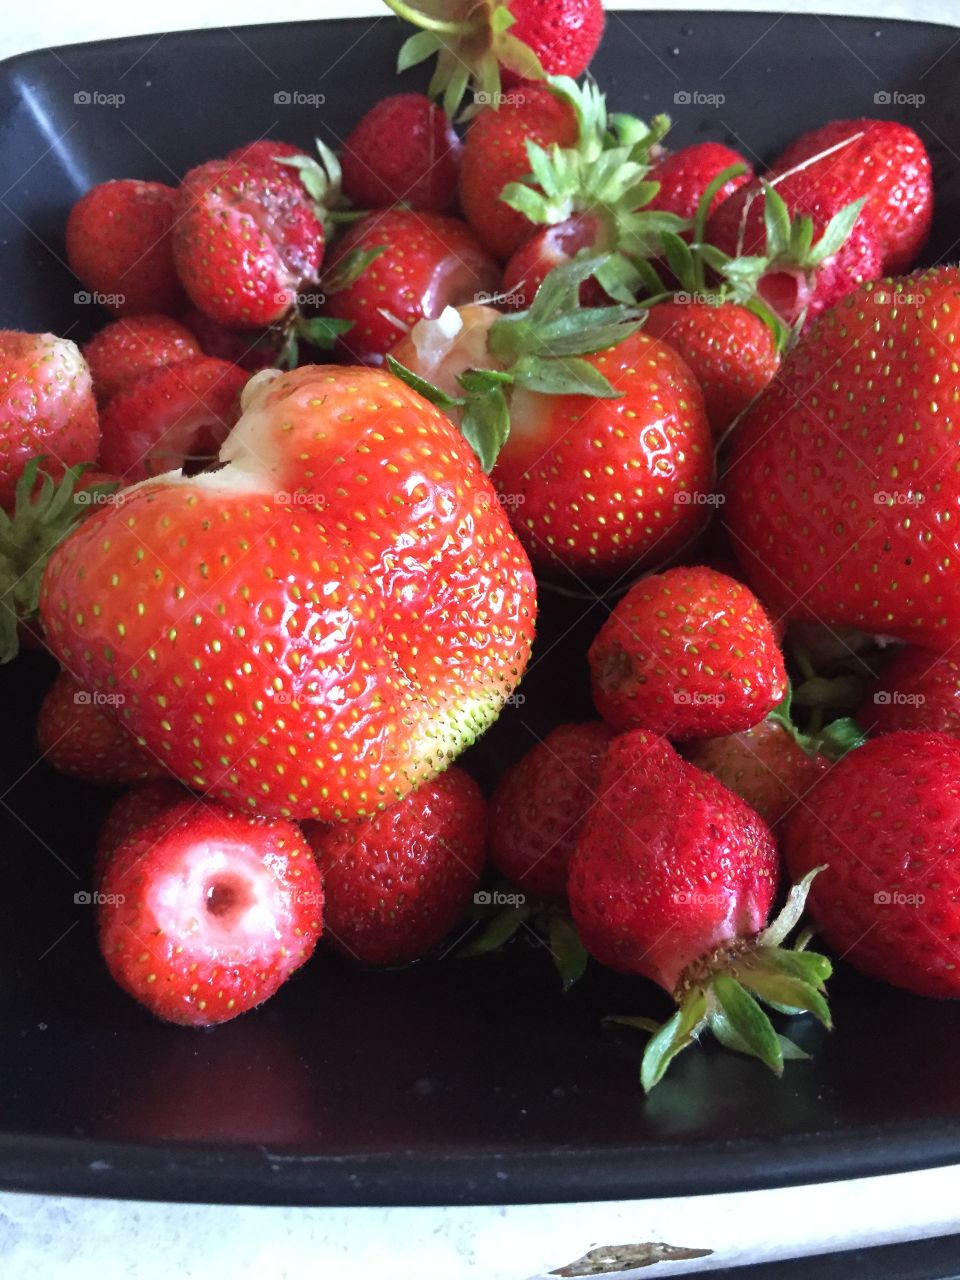 Home grown strawberries 